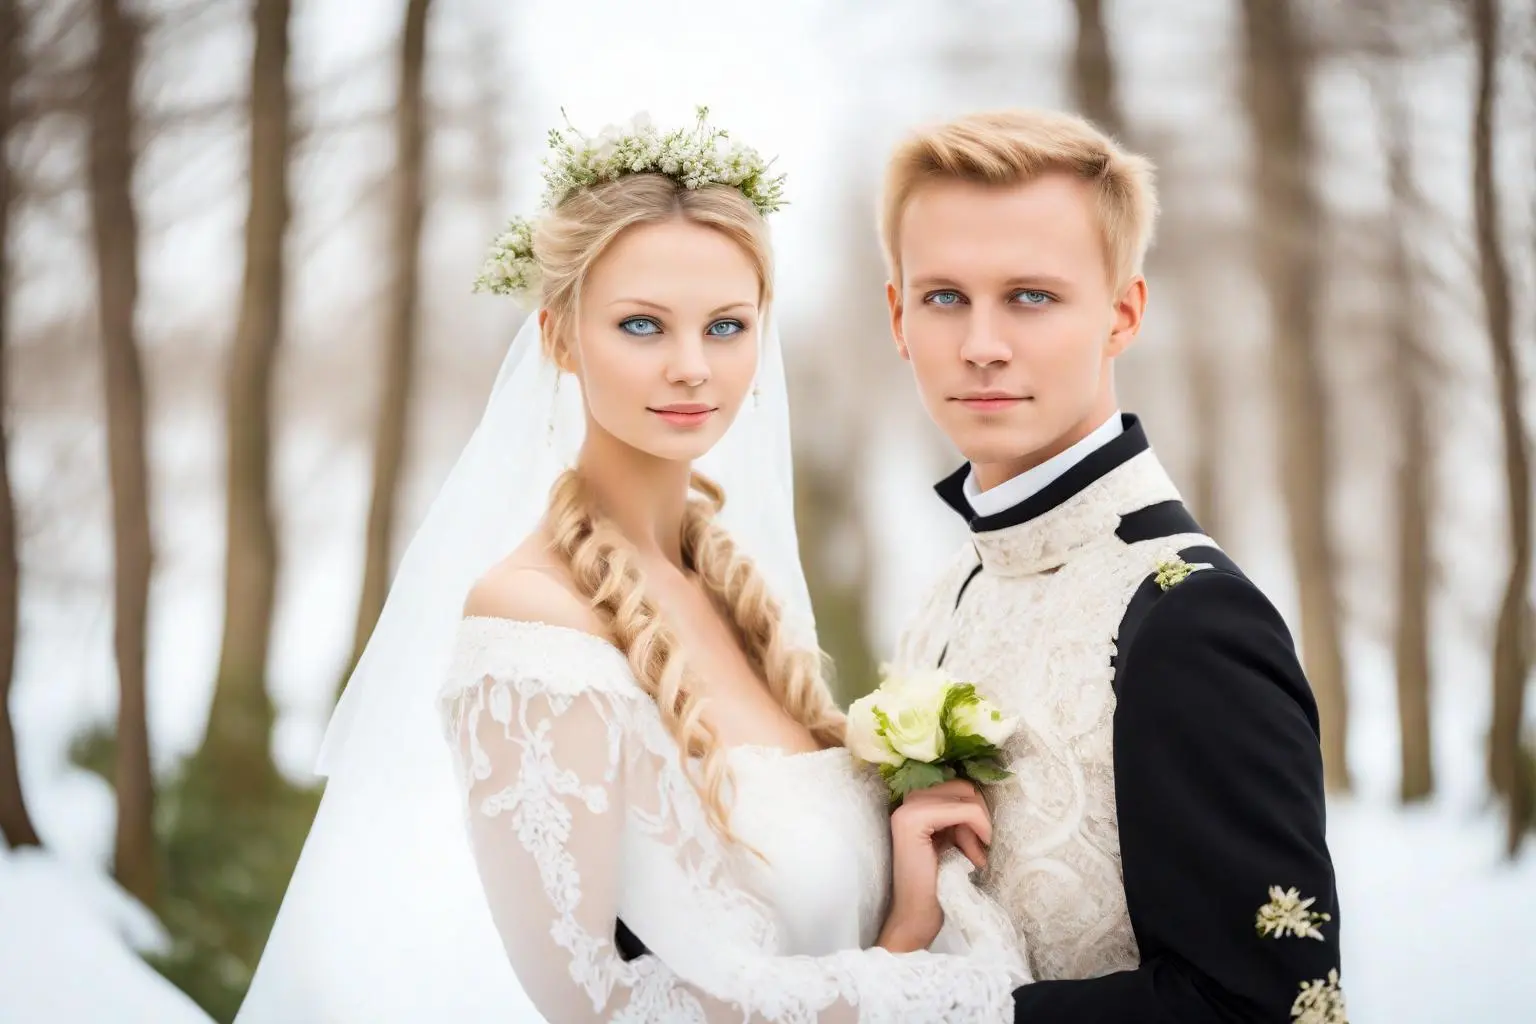 Do Estonian women marry foreigners?